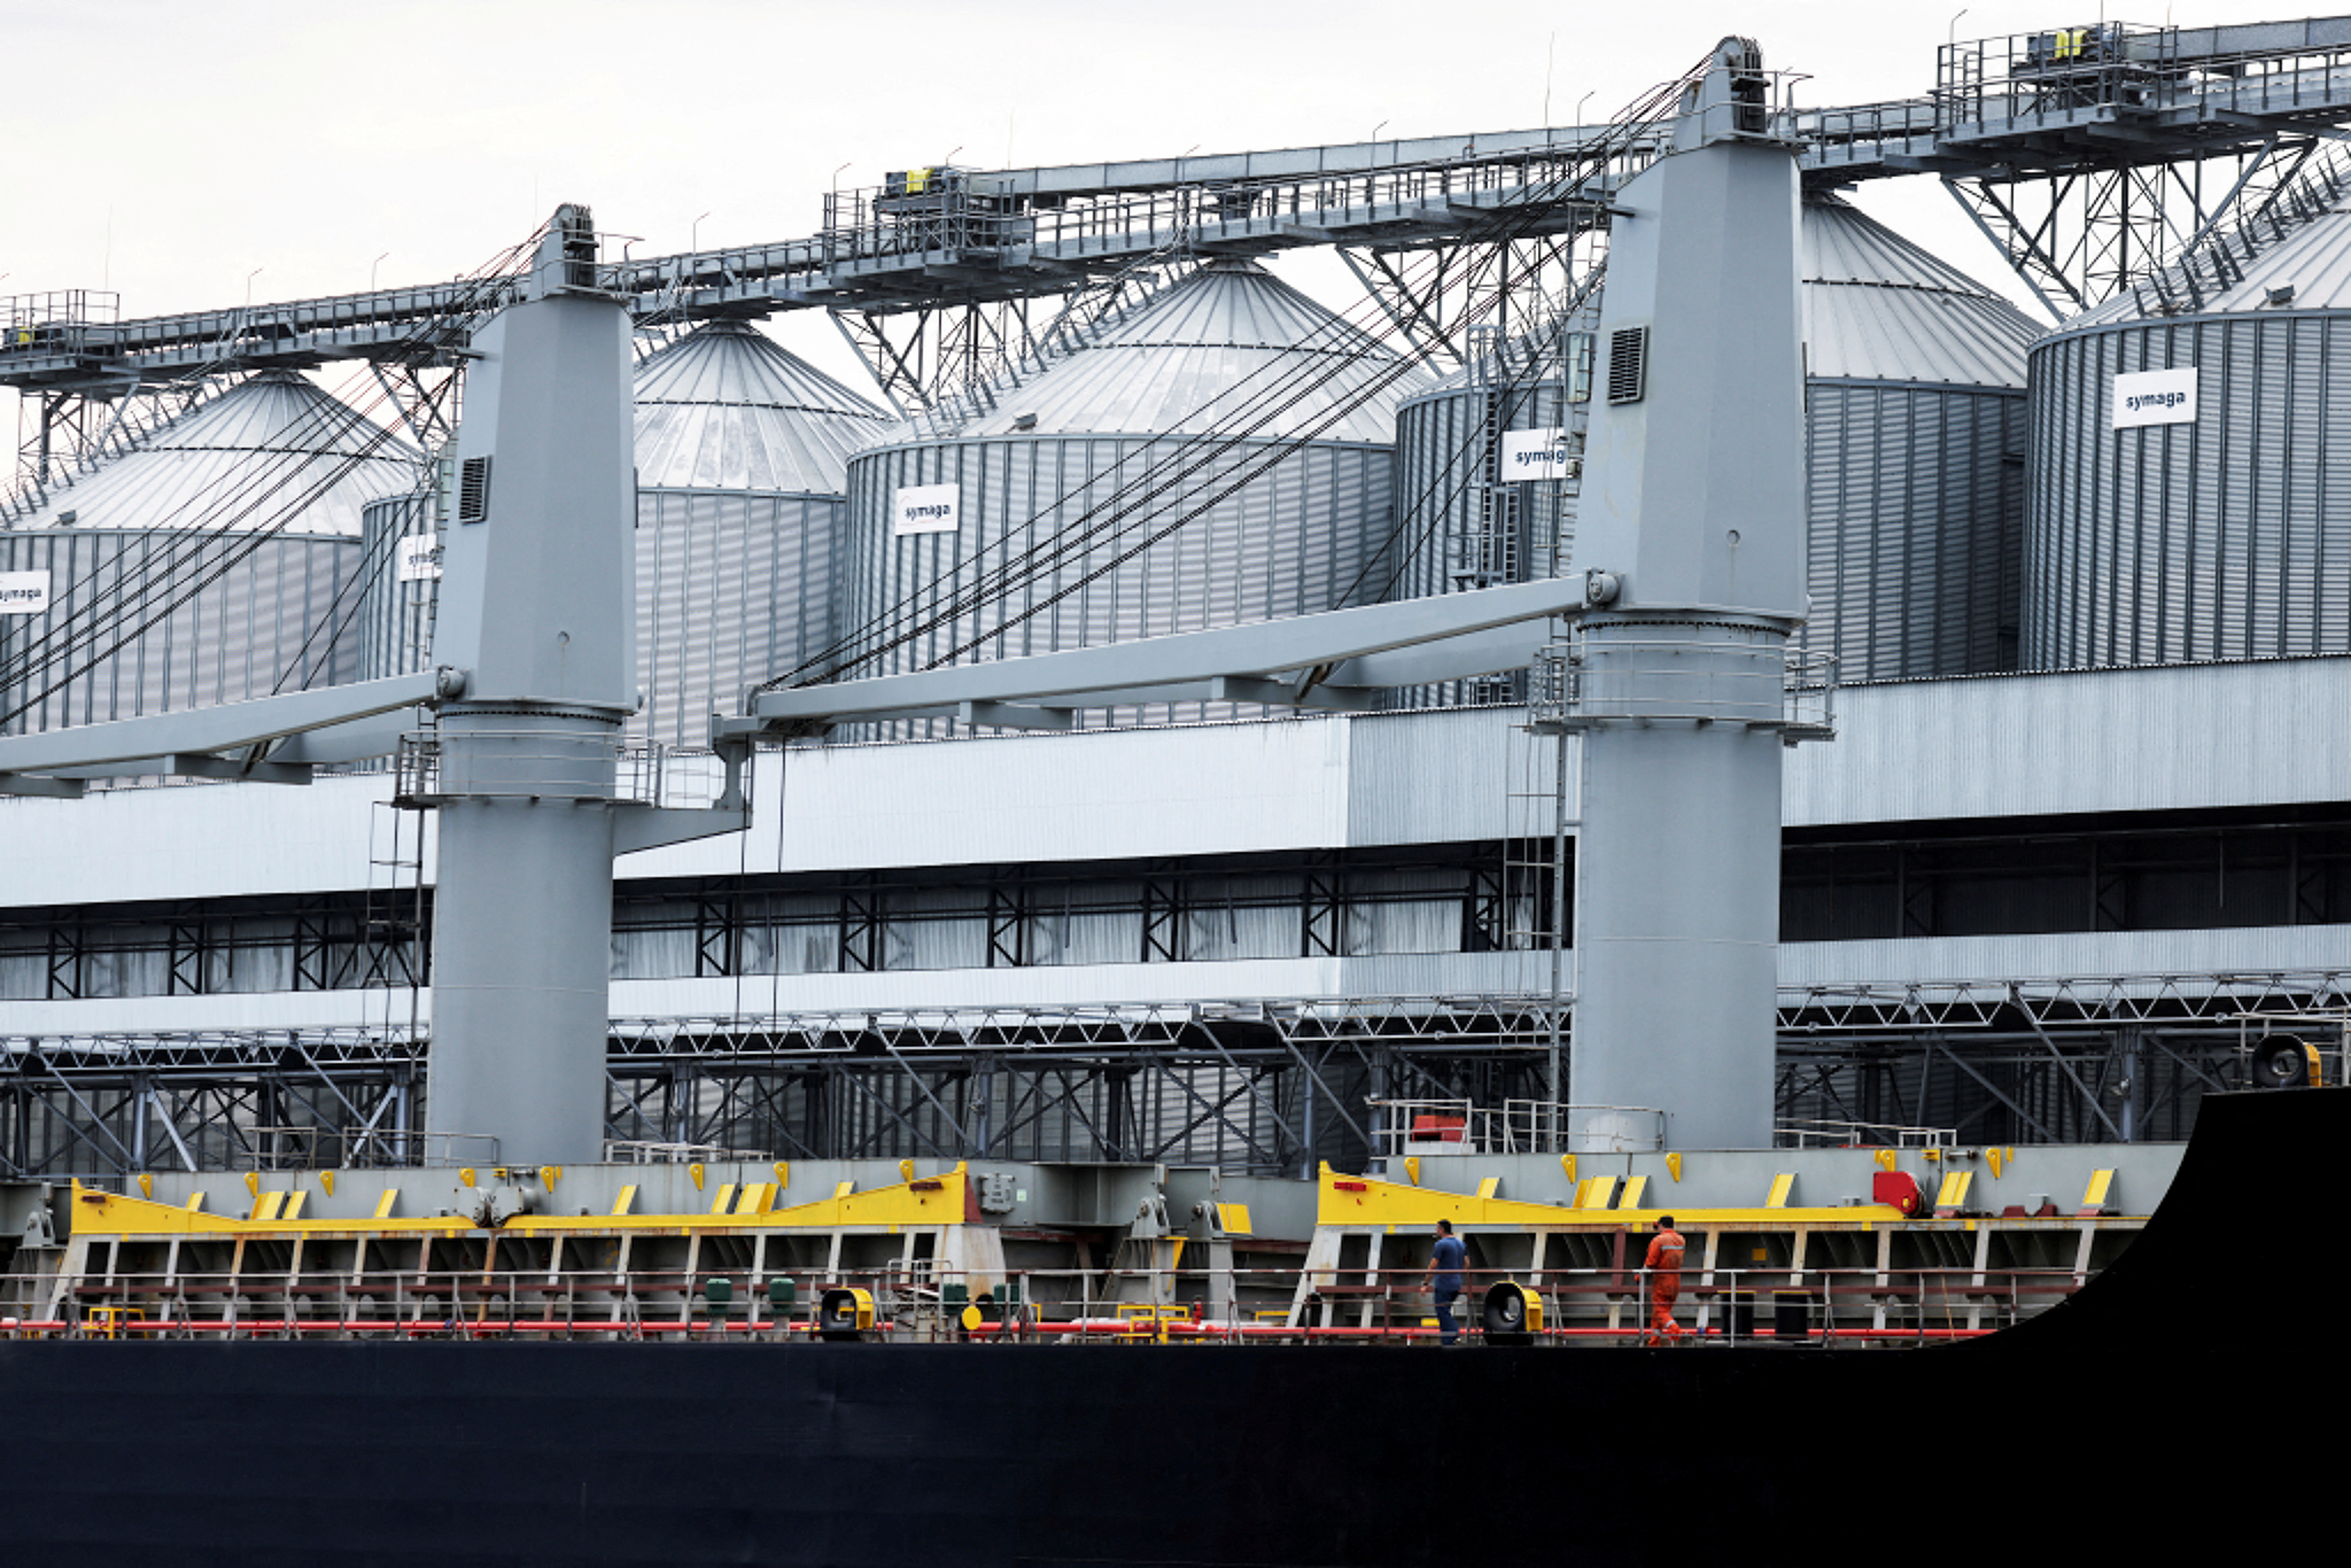 Ukraine ready to ship grain, awaits signal for first shipment